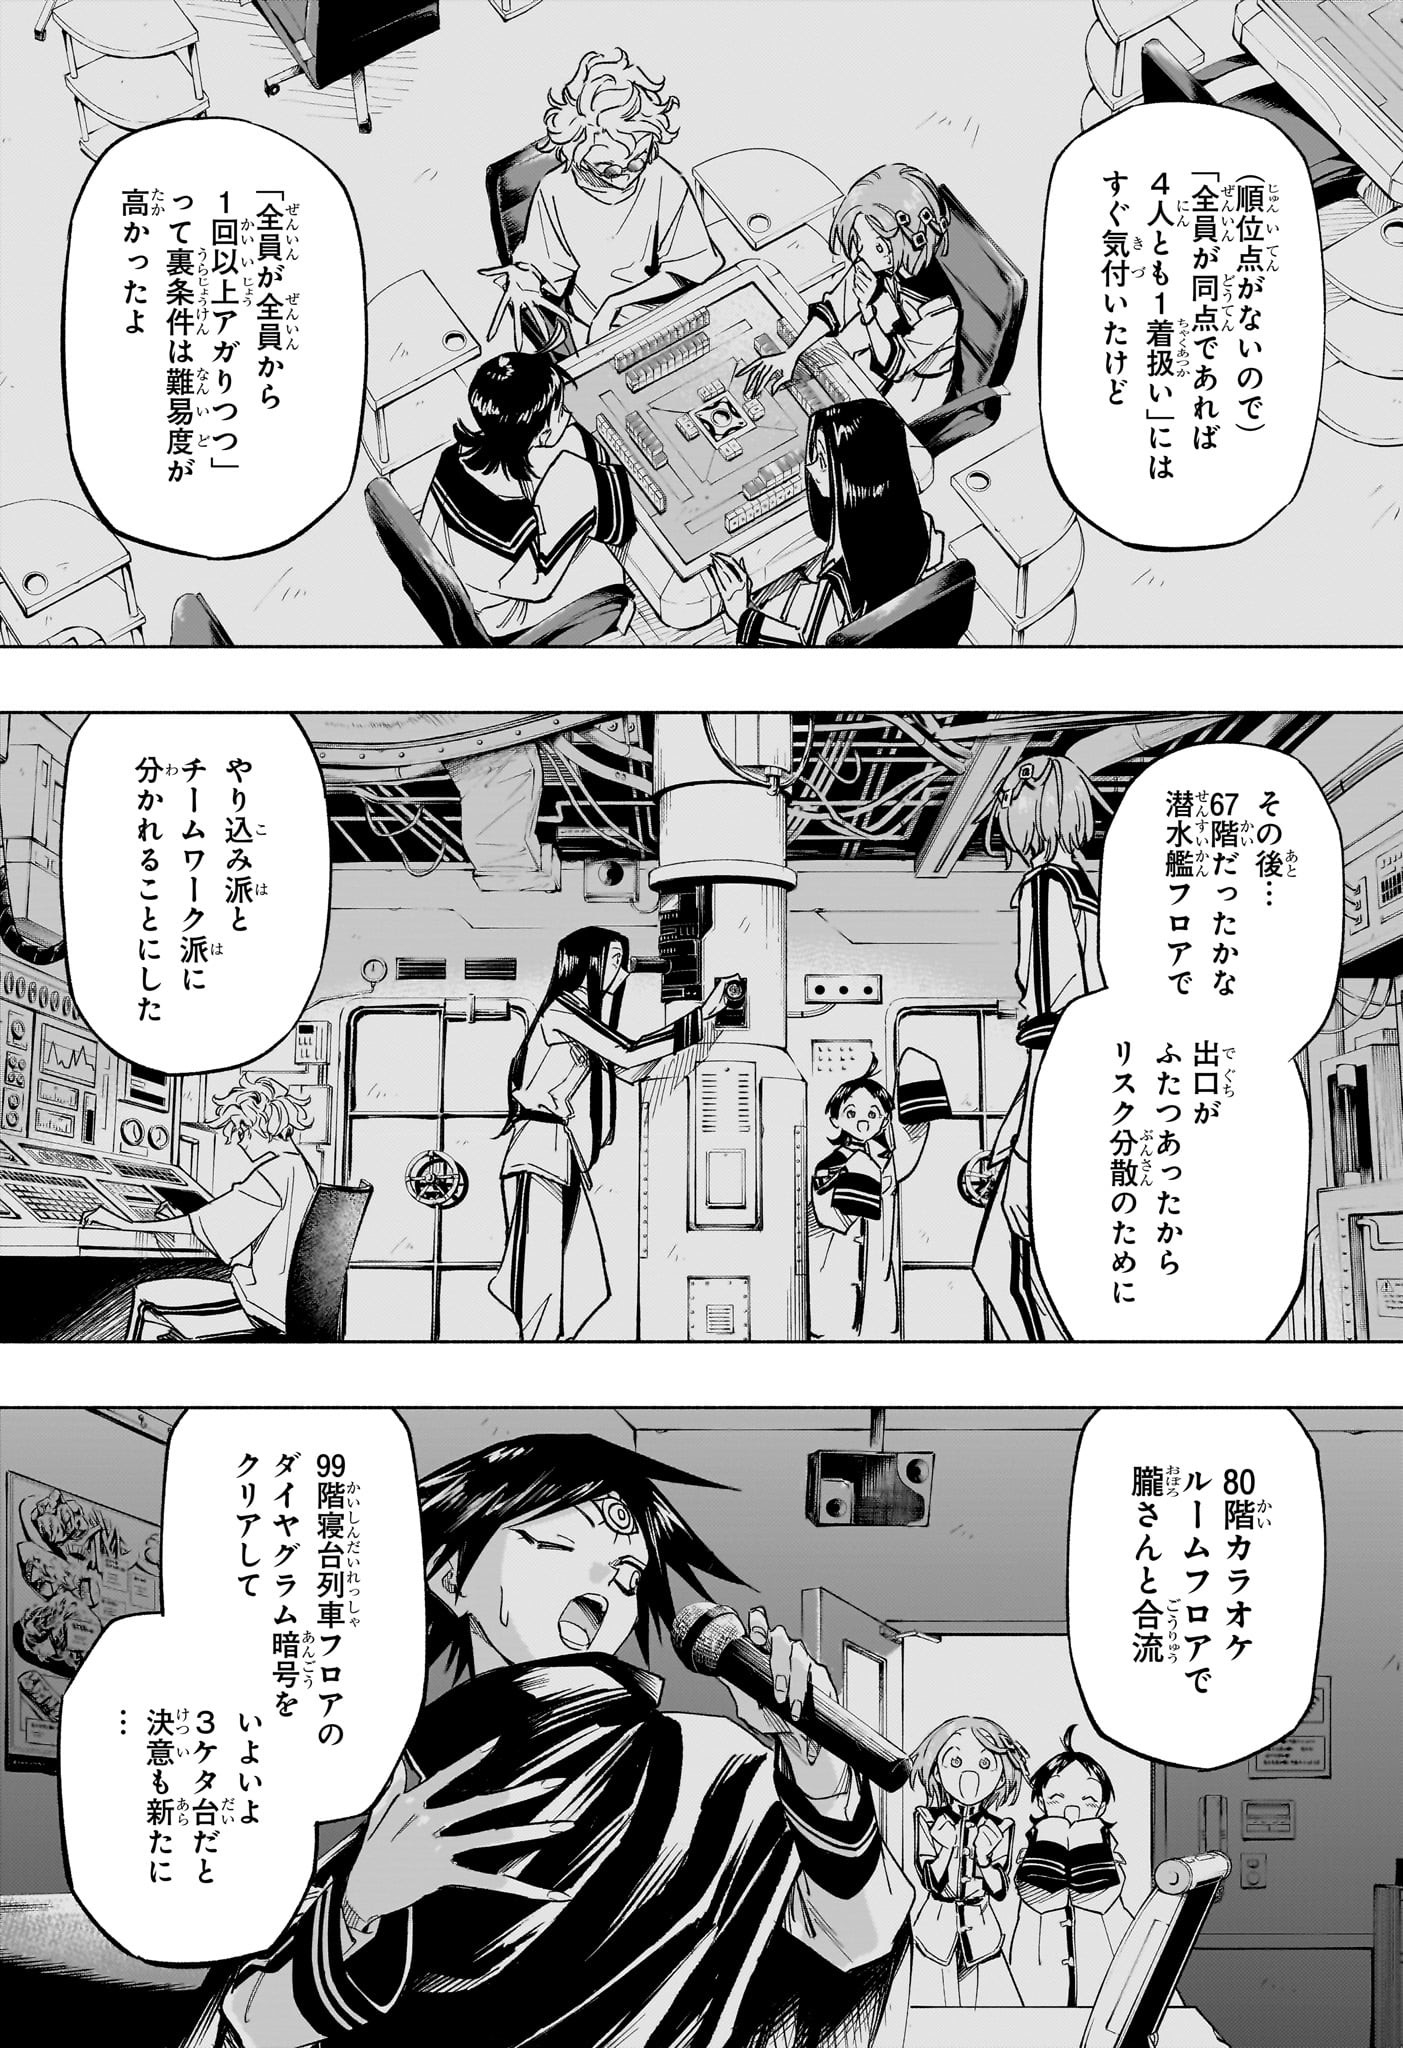 Angou Gakuen no Iroha - Chapter 50 - Page 2